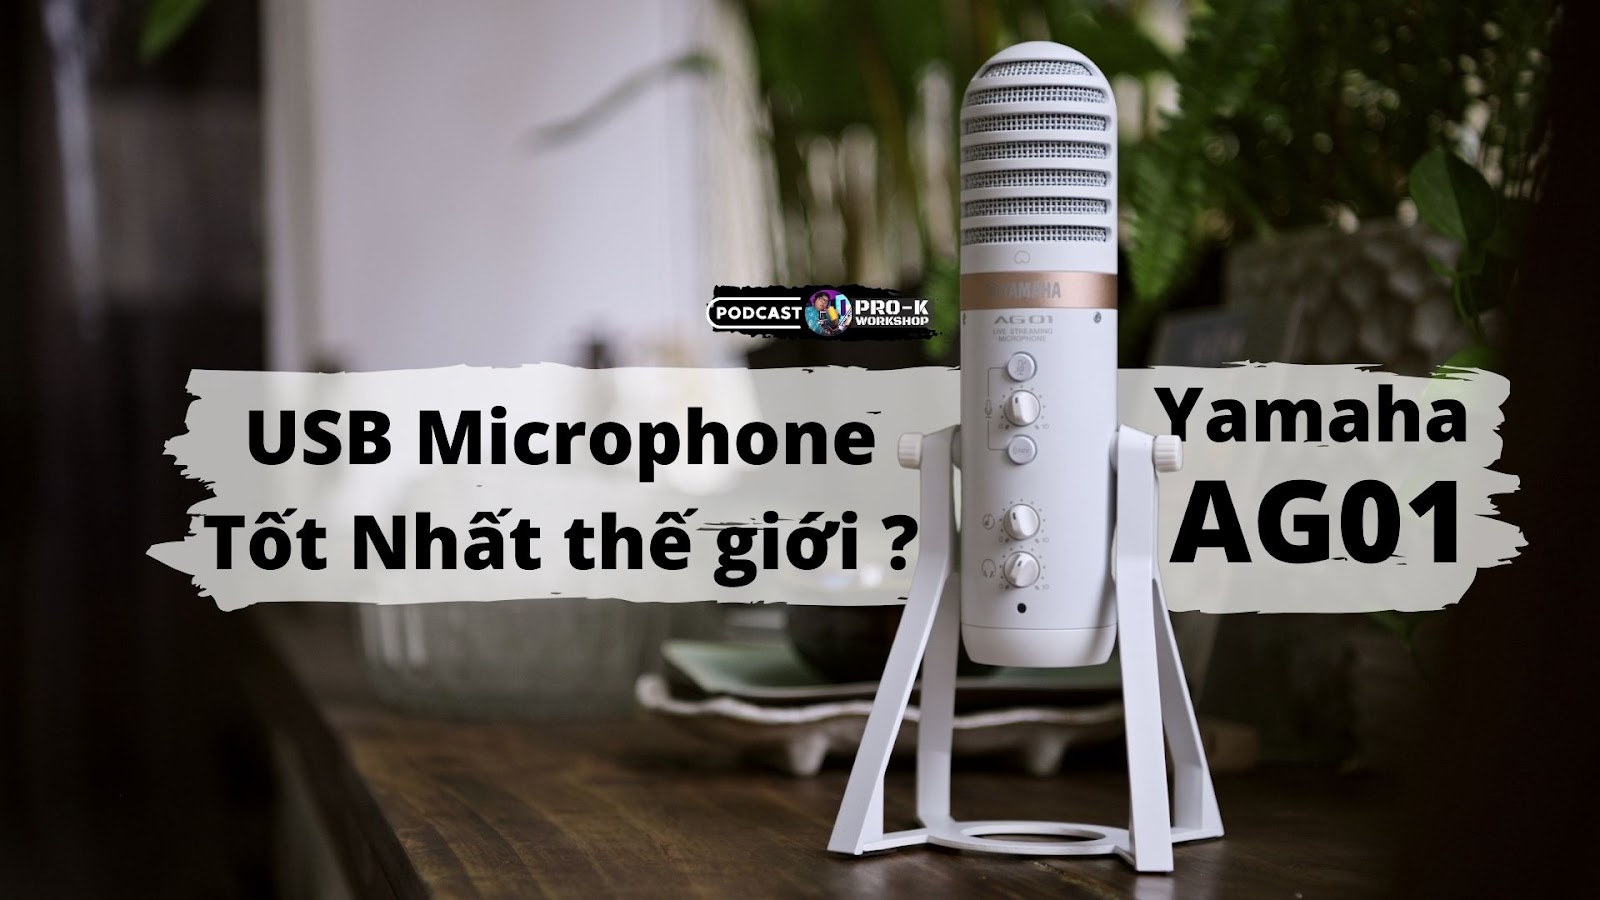 Yamaha AG01 Microphone USB All in One toàn diện nhất 2022 ?